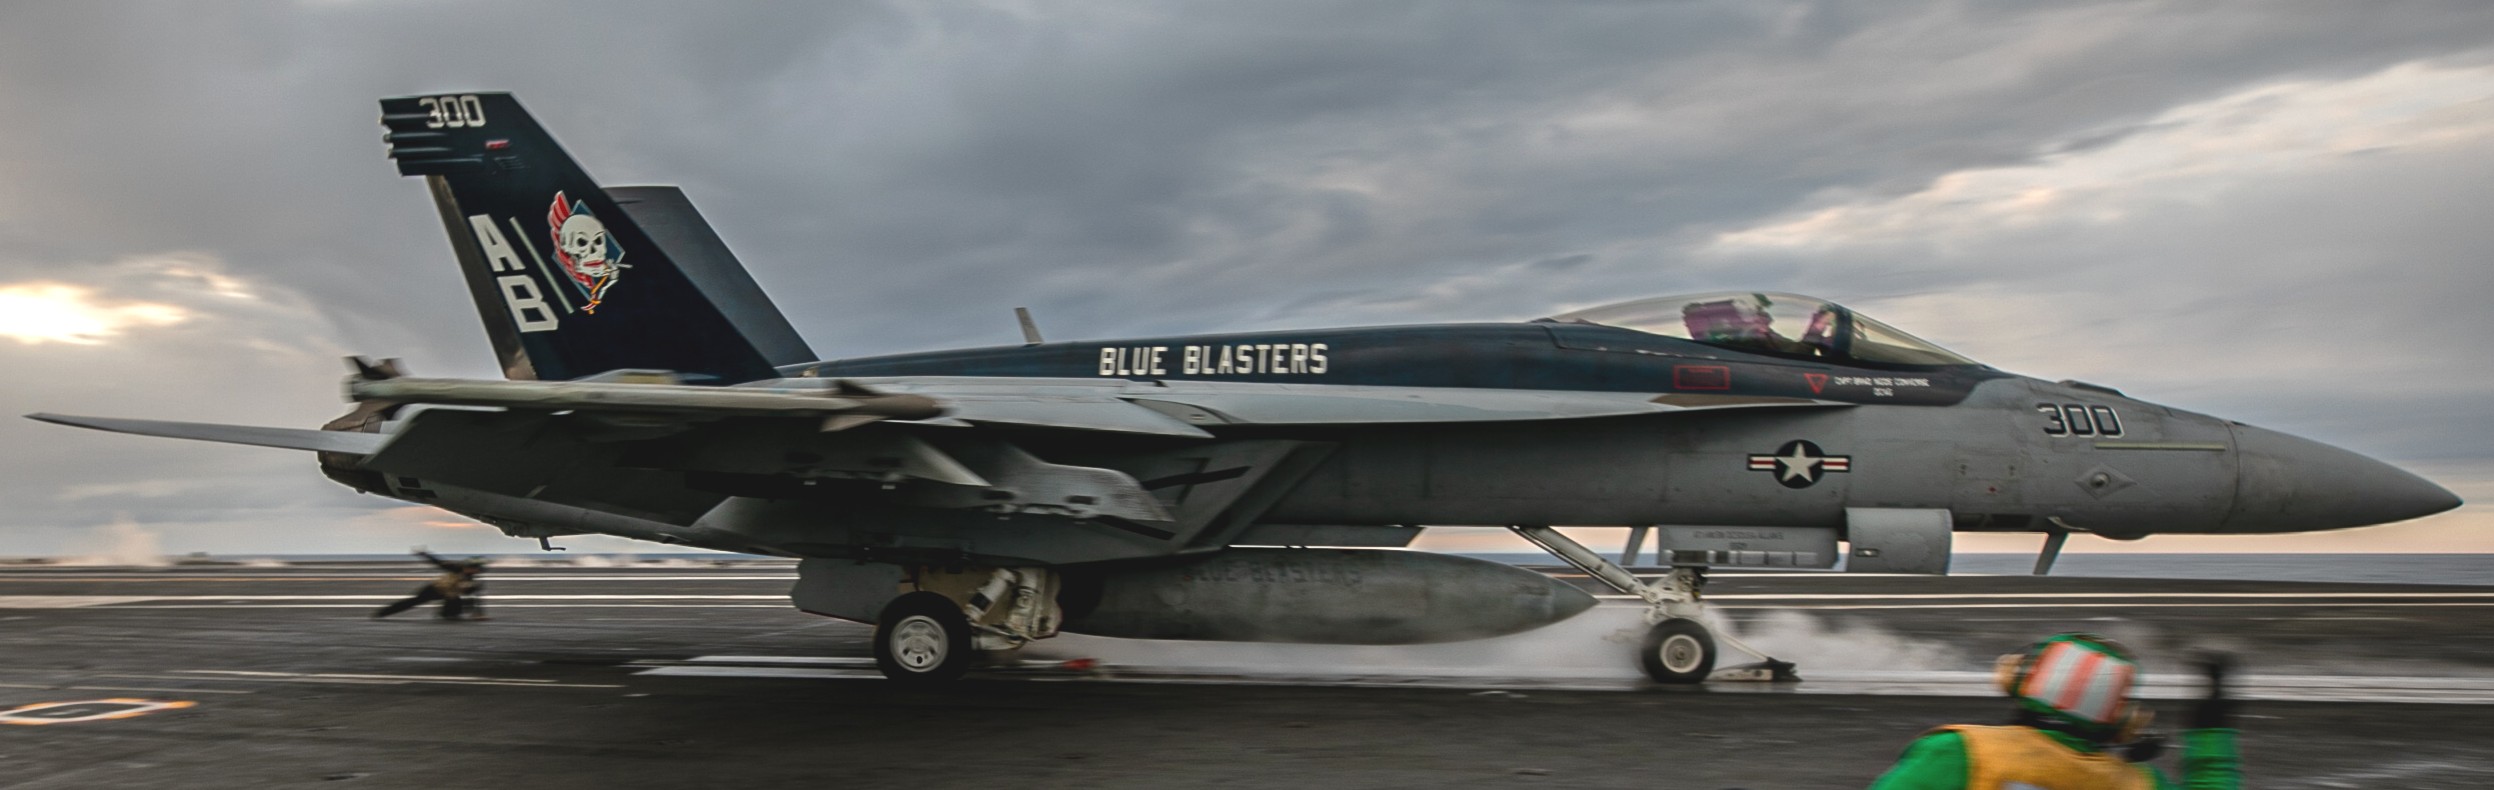 vfa-34 blue blasters strike fighter squadron f/a-18e super hornet cvn-75 uss harry s. truman cvw-8 us navy 85